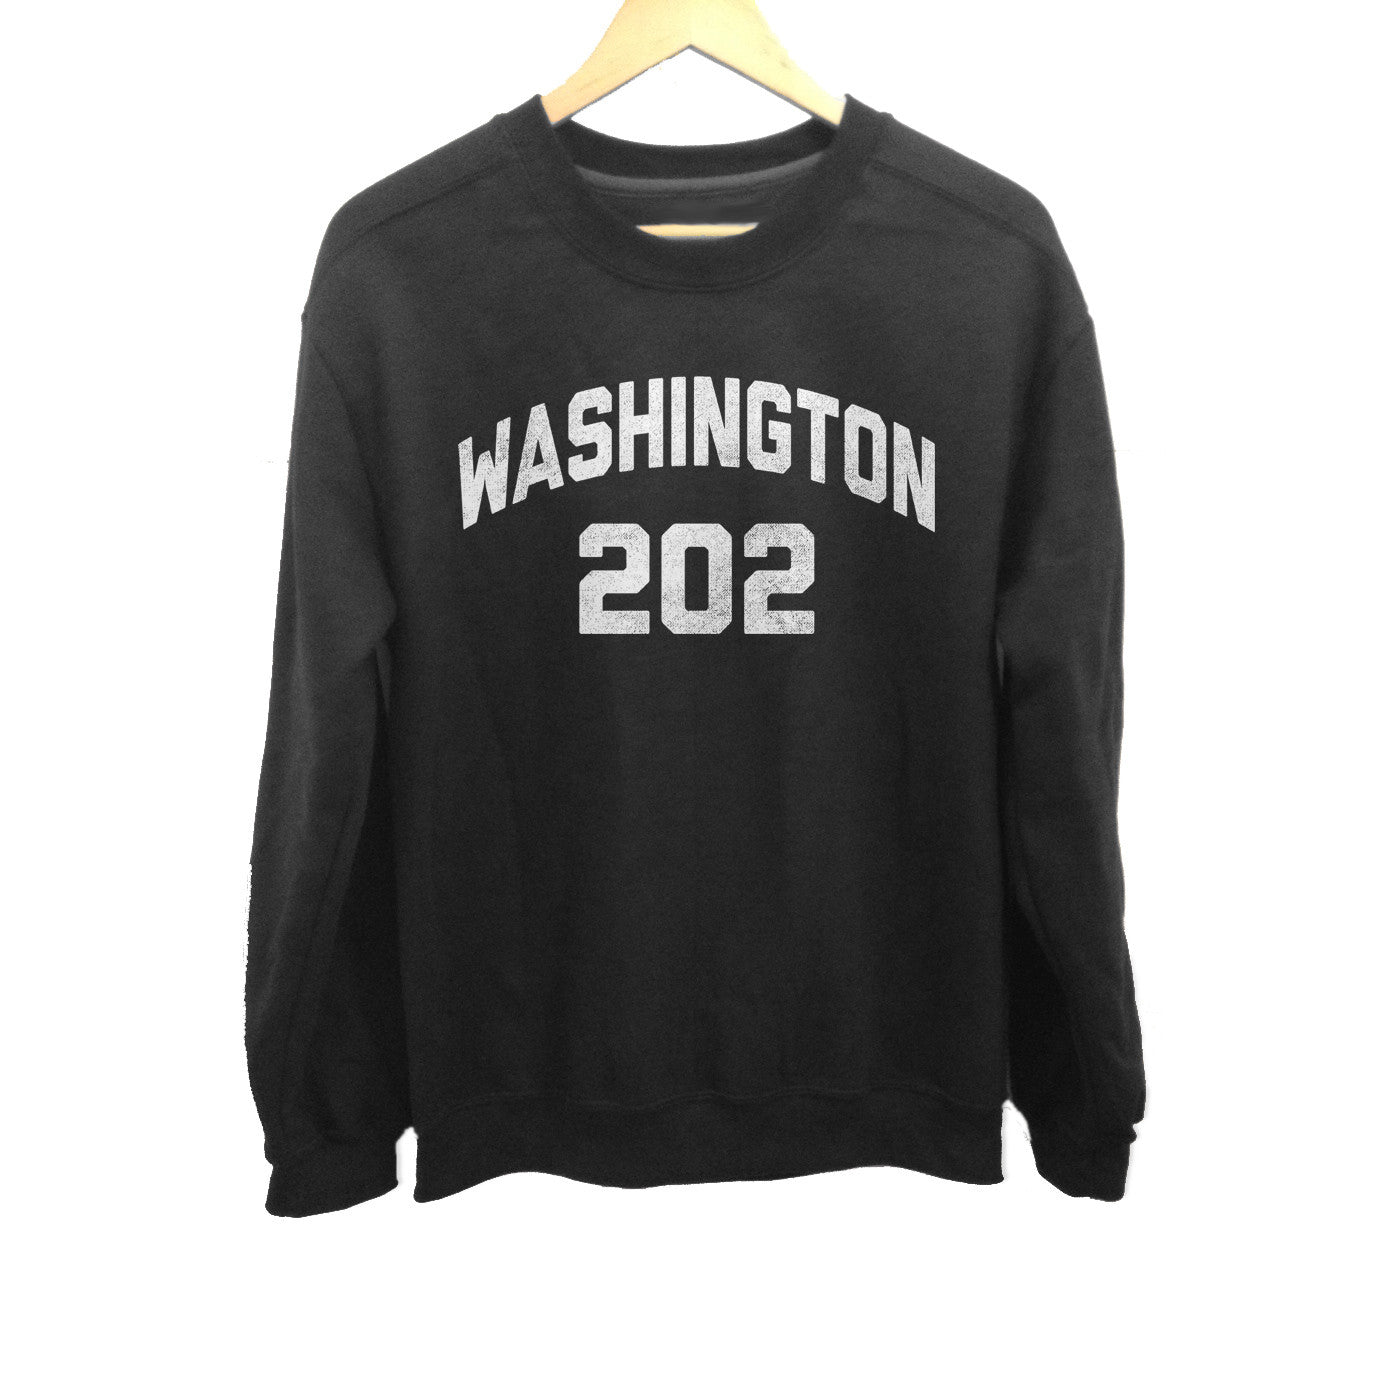 Unisex Washington DC 202 Area Code Sweatshirt